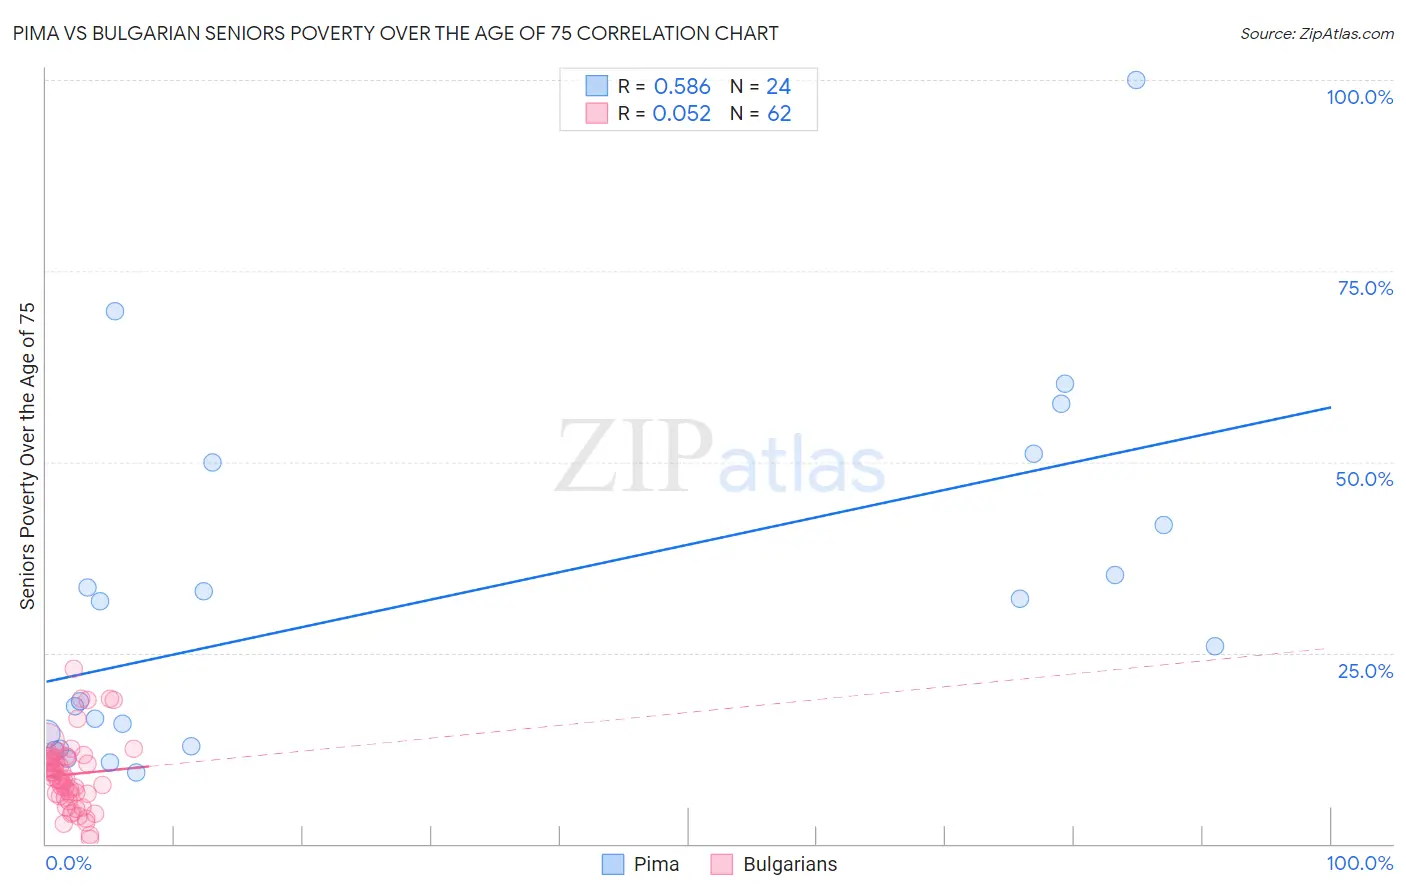 Pima vs Bulgarian Seniors Poverty Over the Age of 75